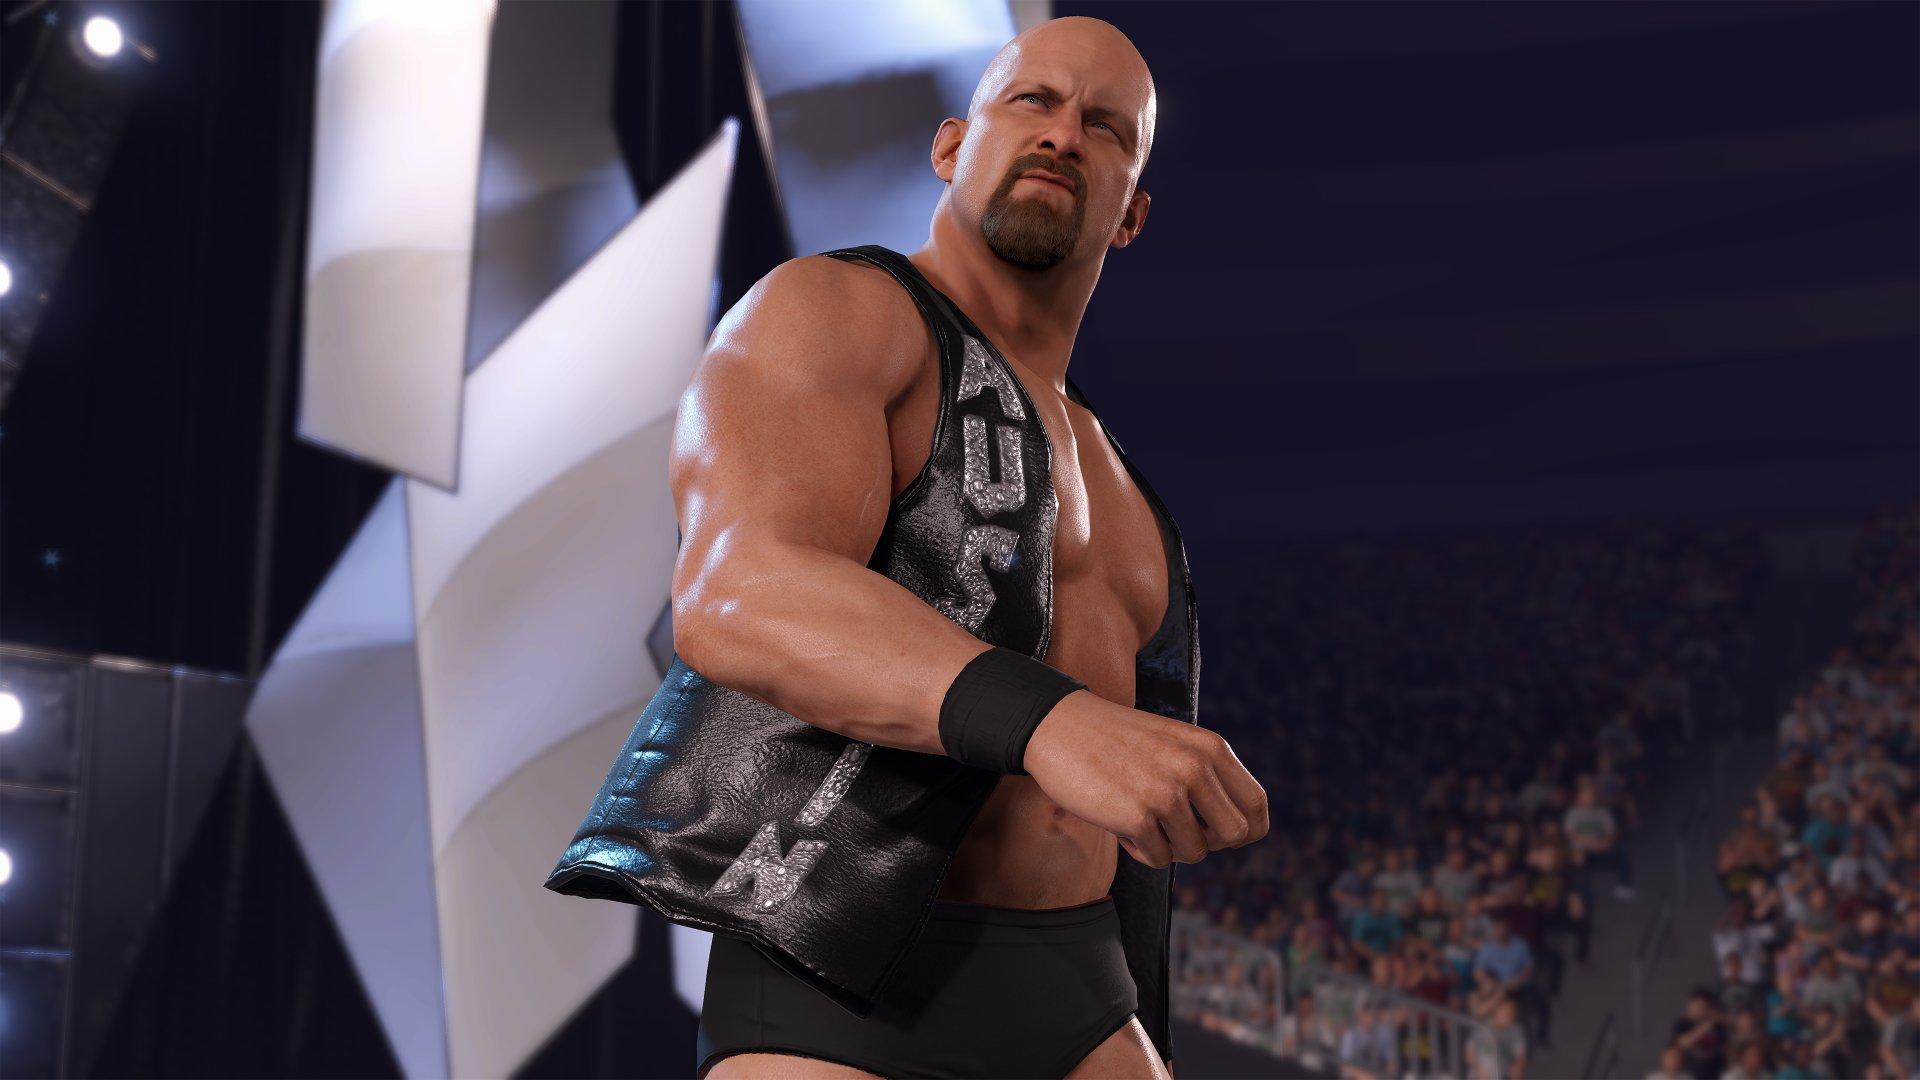  WWE 2K23 - PlayStation 5 : Take 2 Interactive: Everything Else